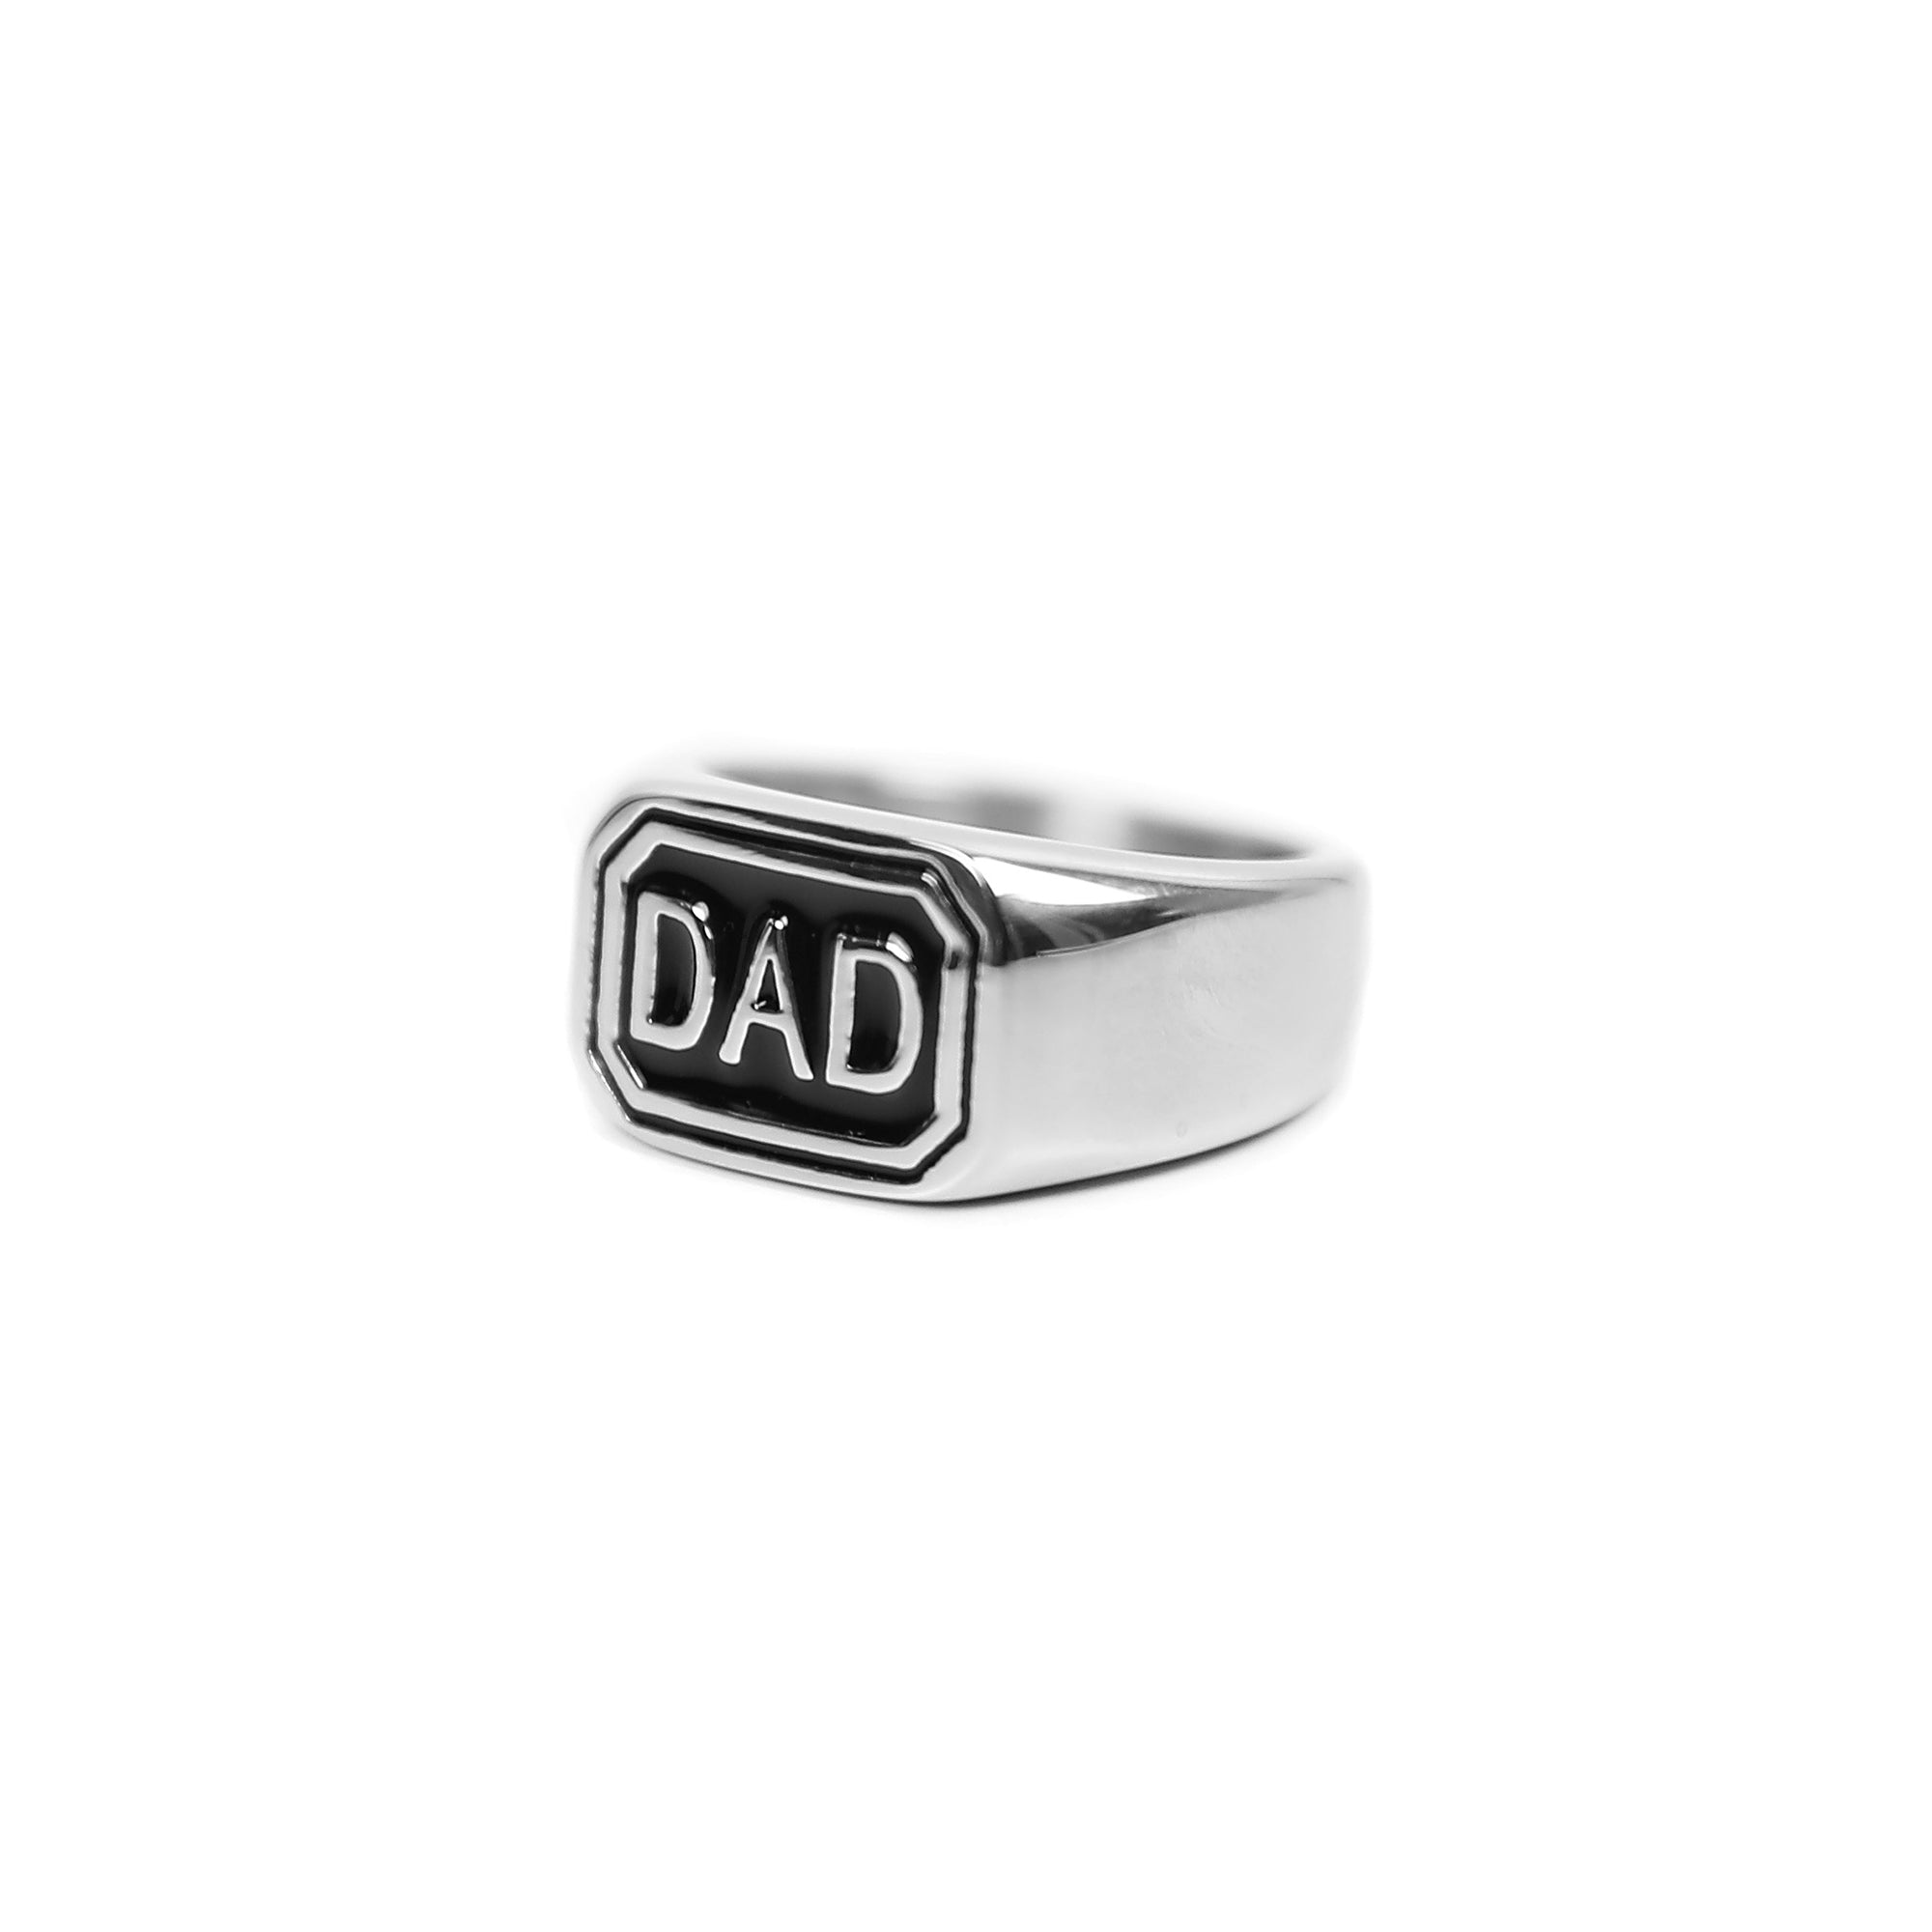 Dad Ring - Silver